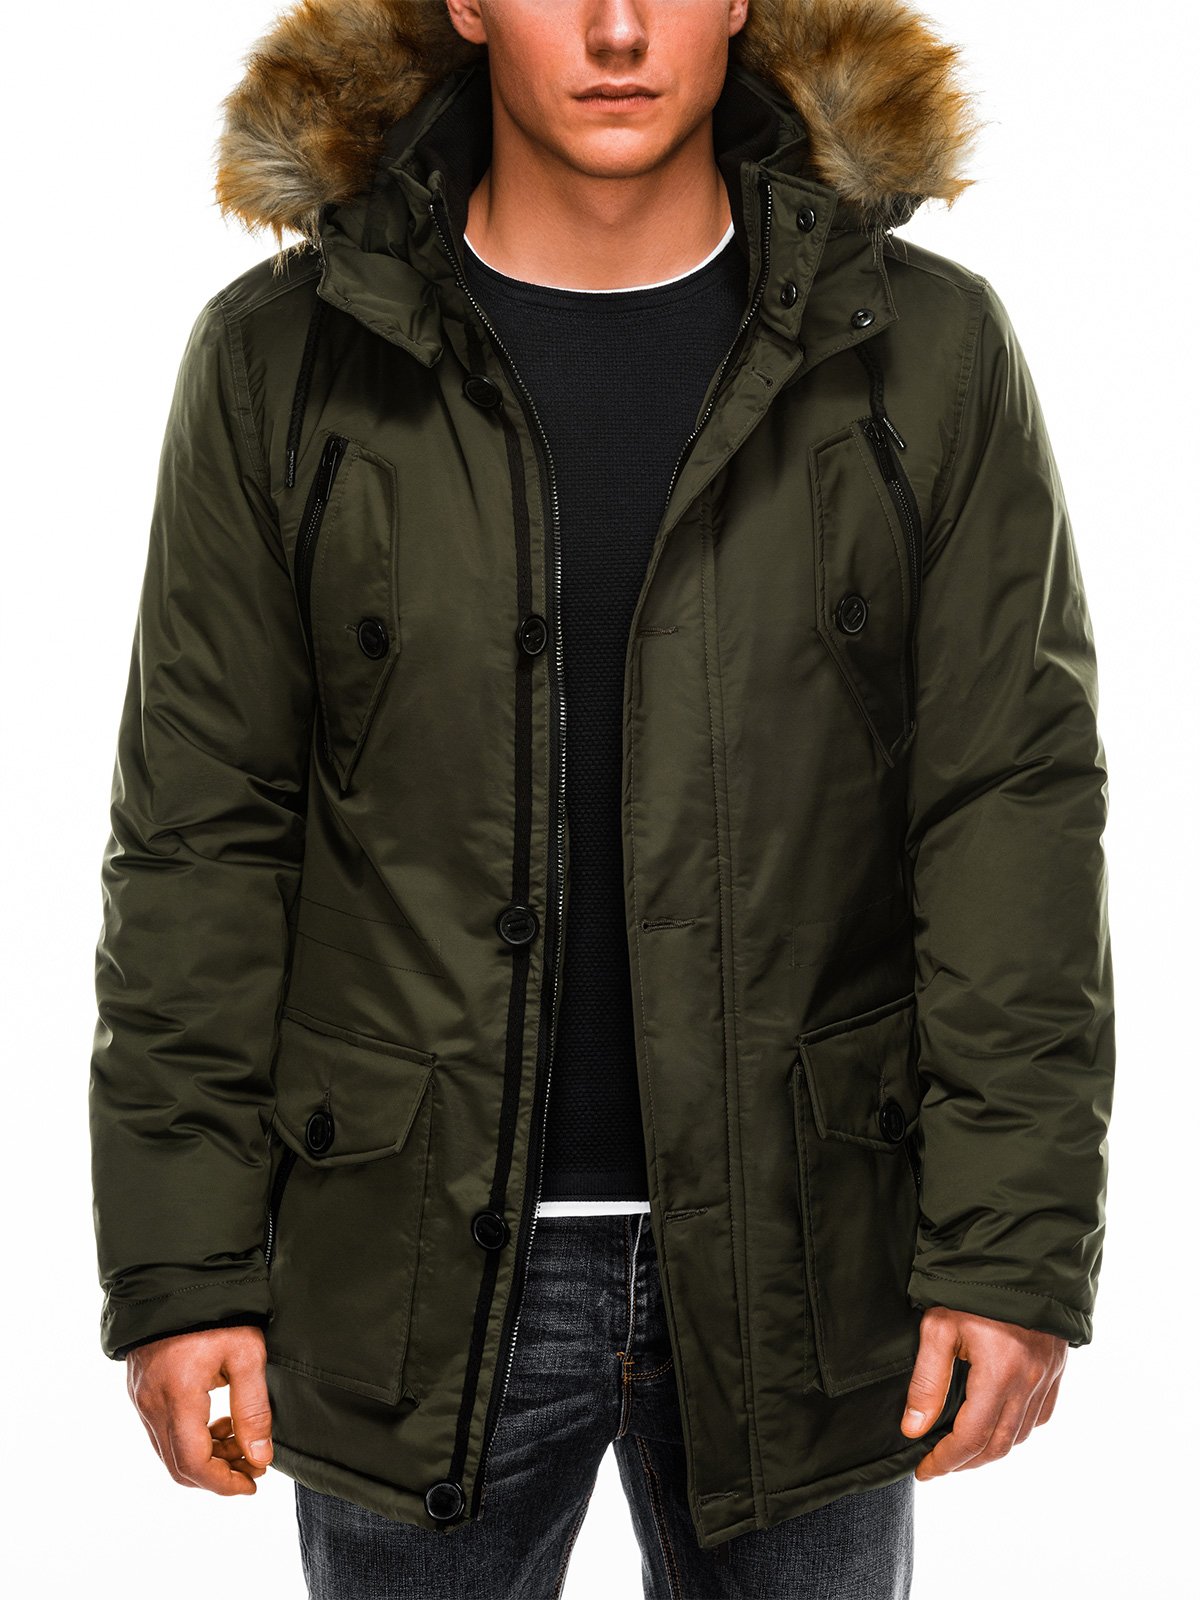 Men's winter parka jacket C361 - khaki | MODONE wholesale - Clothing ...